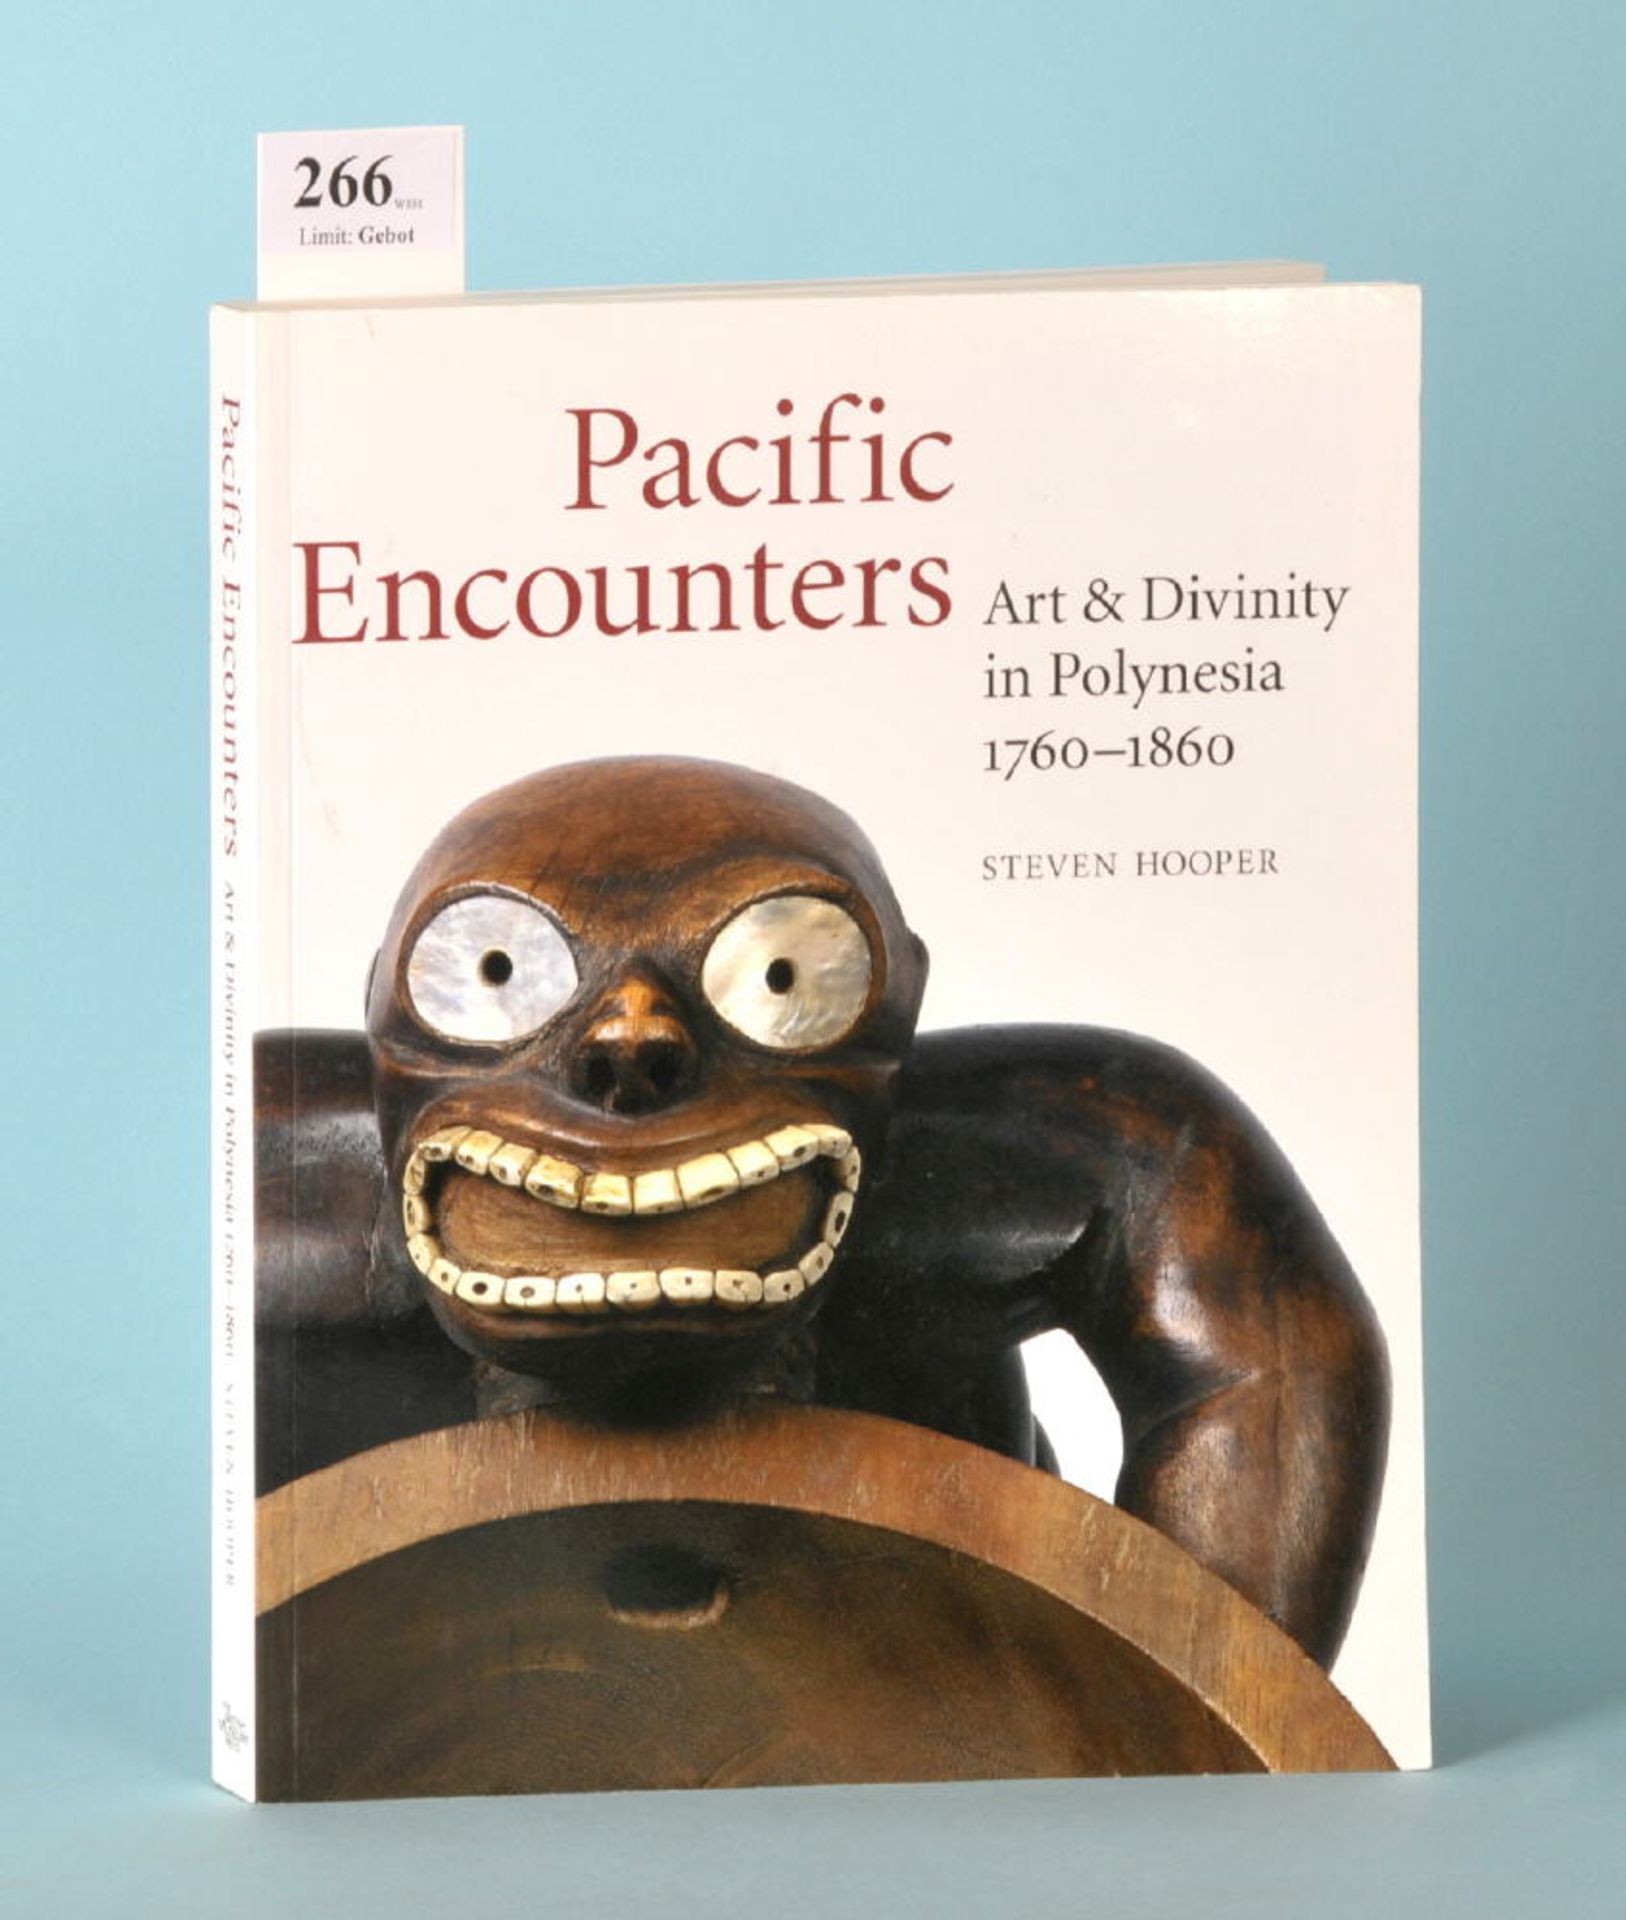 Ausstellungskatalog "Pacific Encounters - Art & Divinity in...""...Polynesia 1760-1860", Sainsbury